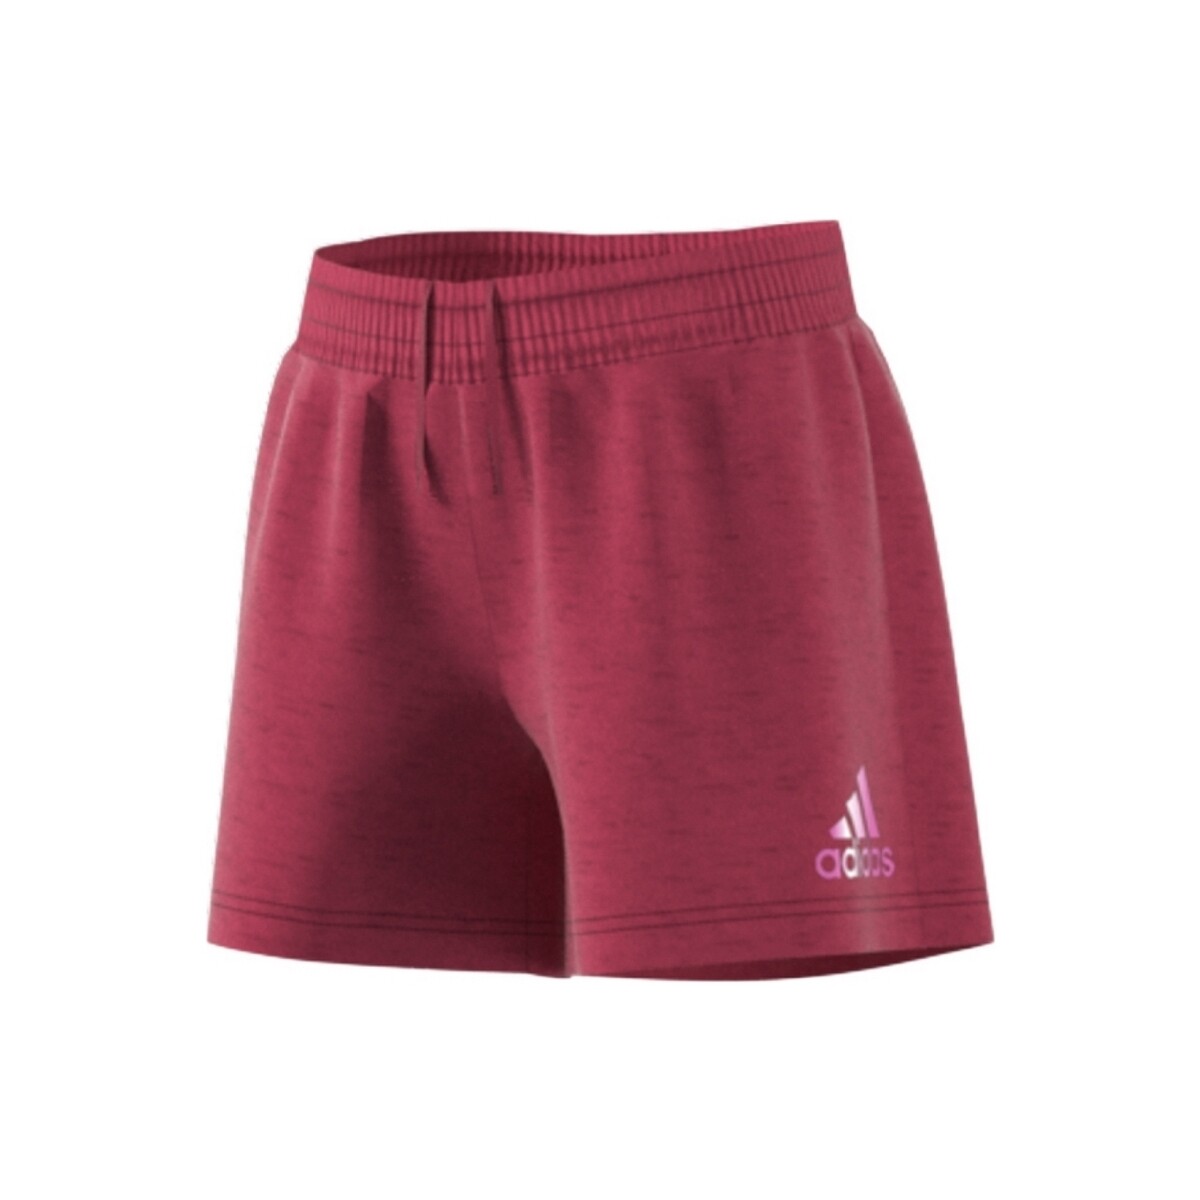 Textil Rapariga Shorts / Bermudas adidas Originals GM6949 Rosa